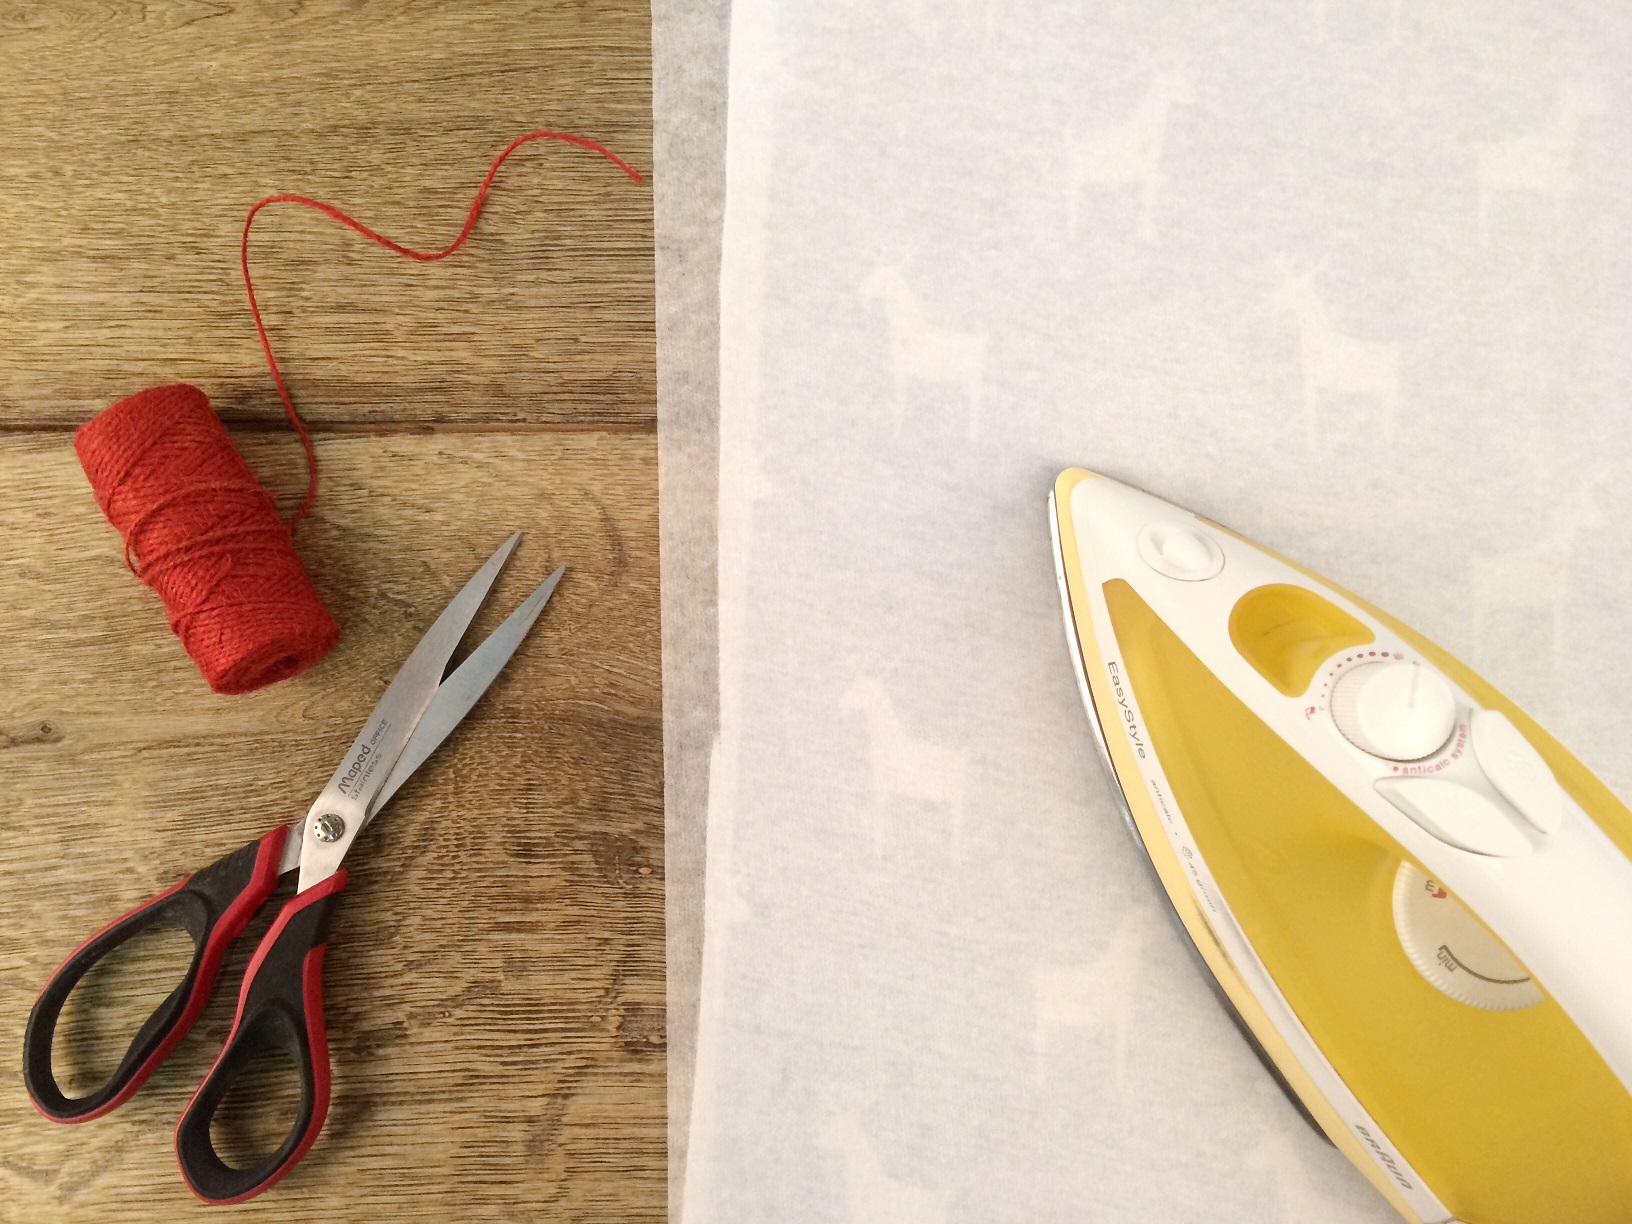 DIY Christmas garland made from fabric scraps